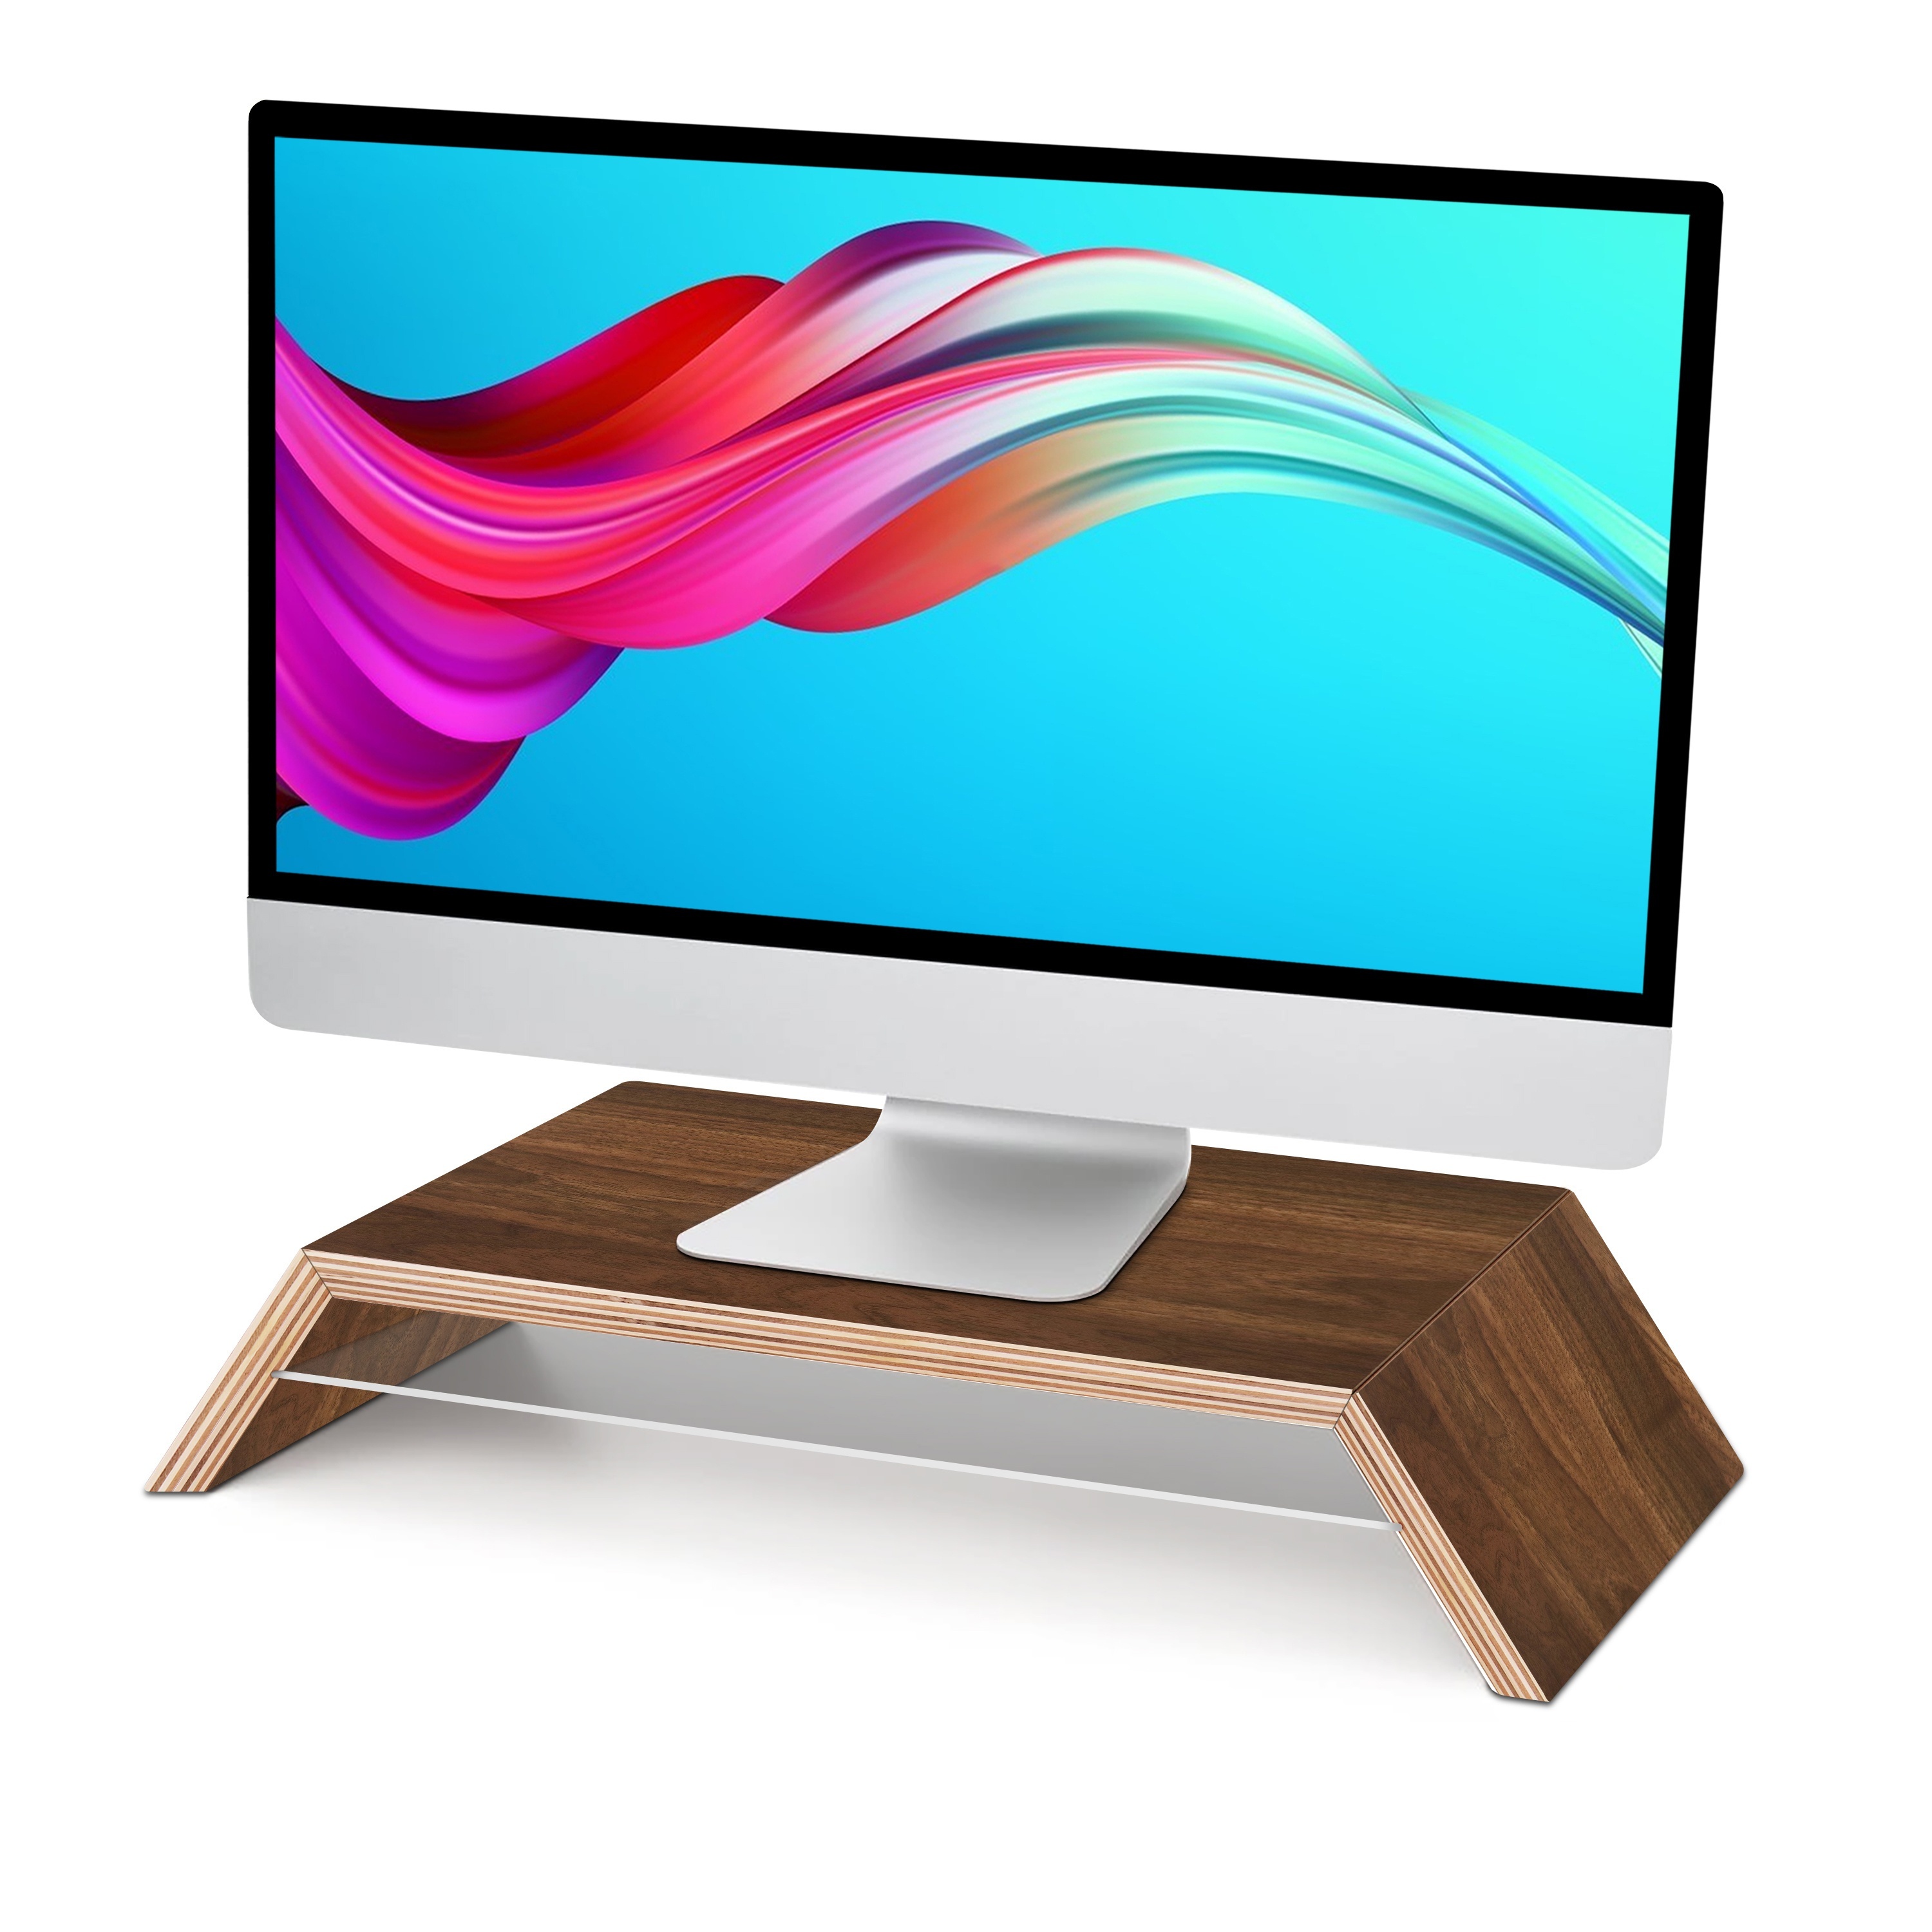 Soporte para monitor de madera maciza, soporte de escritorio universal para  computadora portátil, impresora de TV, organizador de almacenamiento para